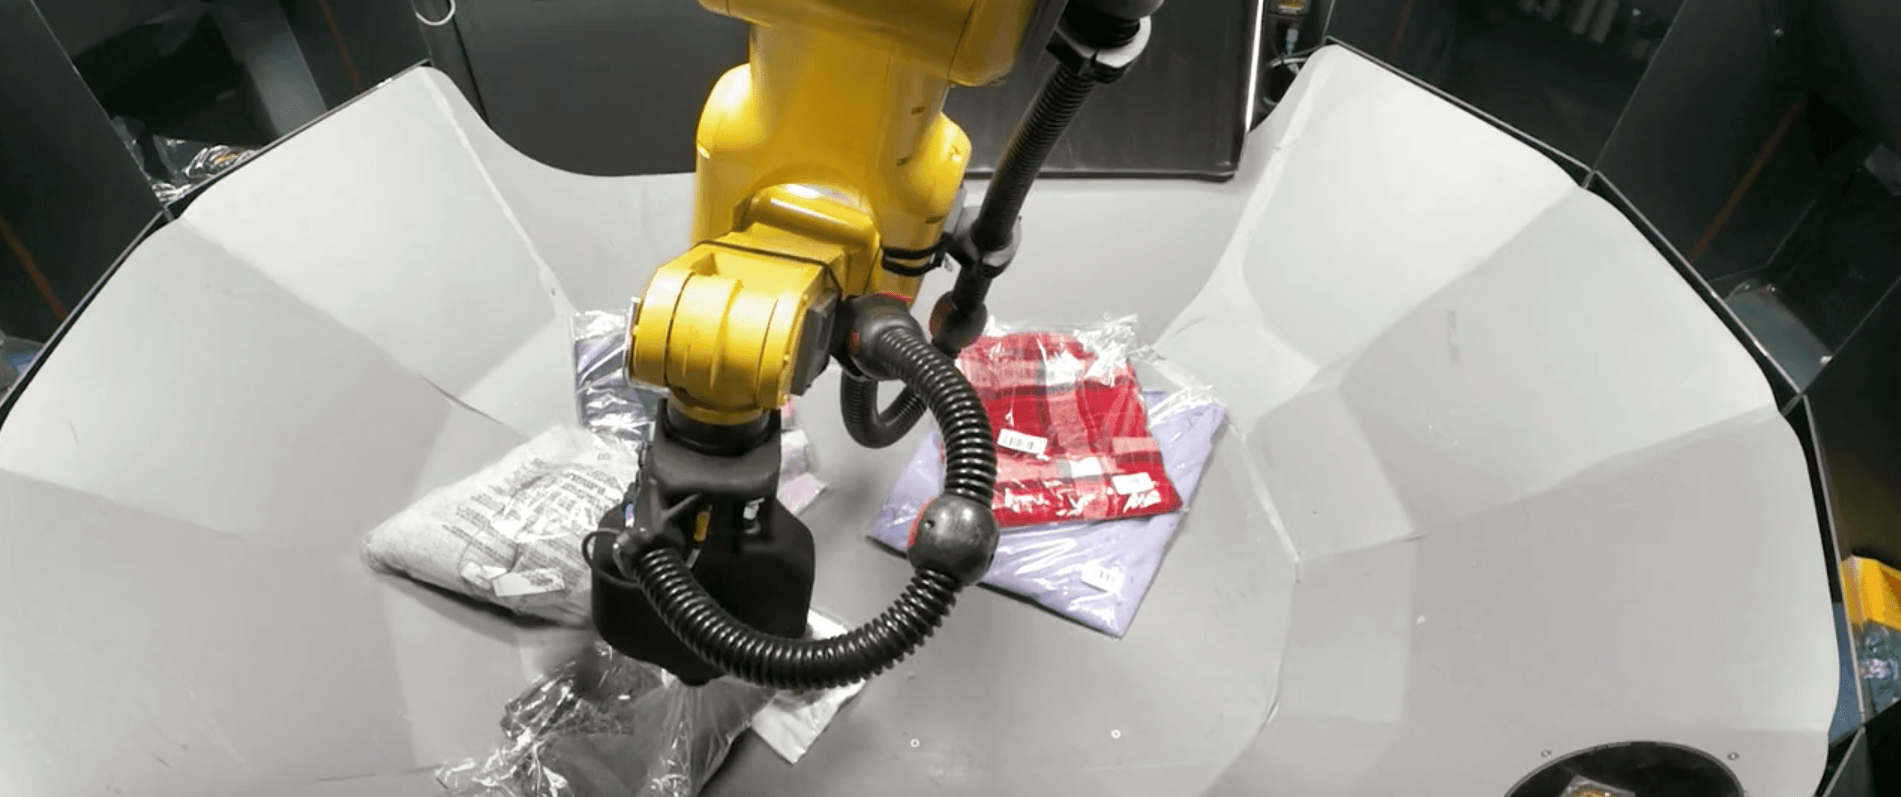 Warehousing Robots